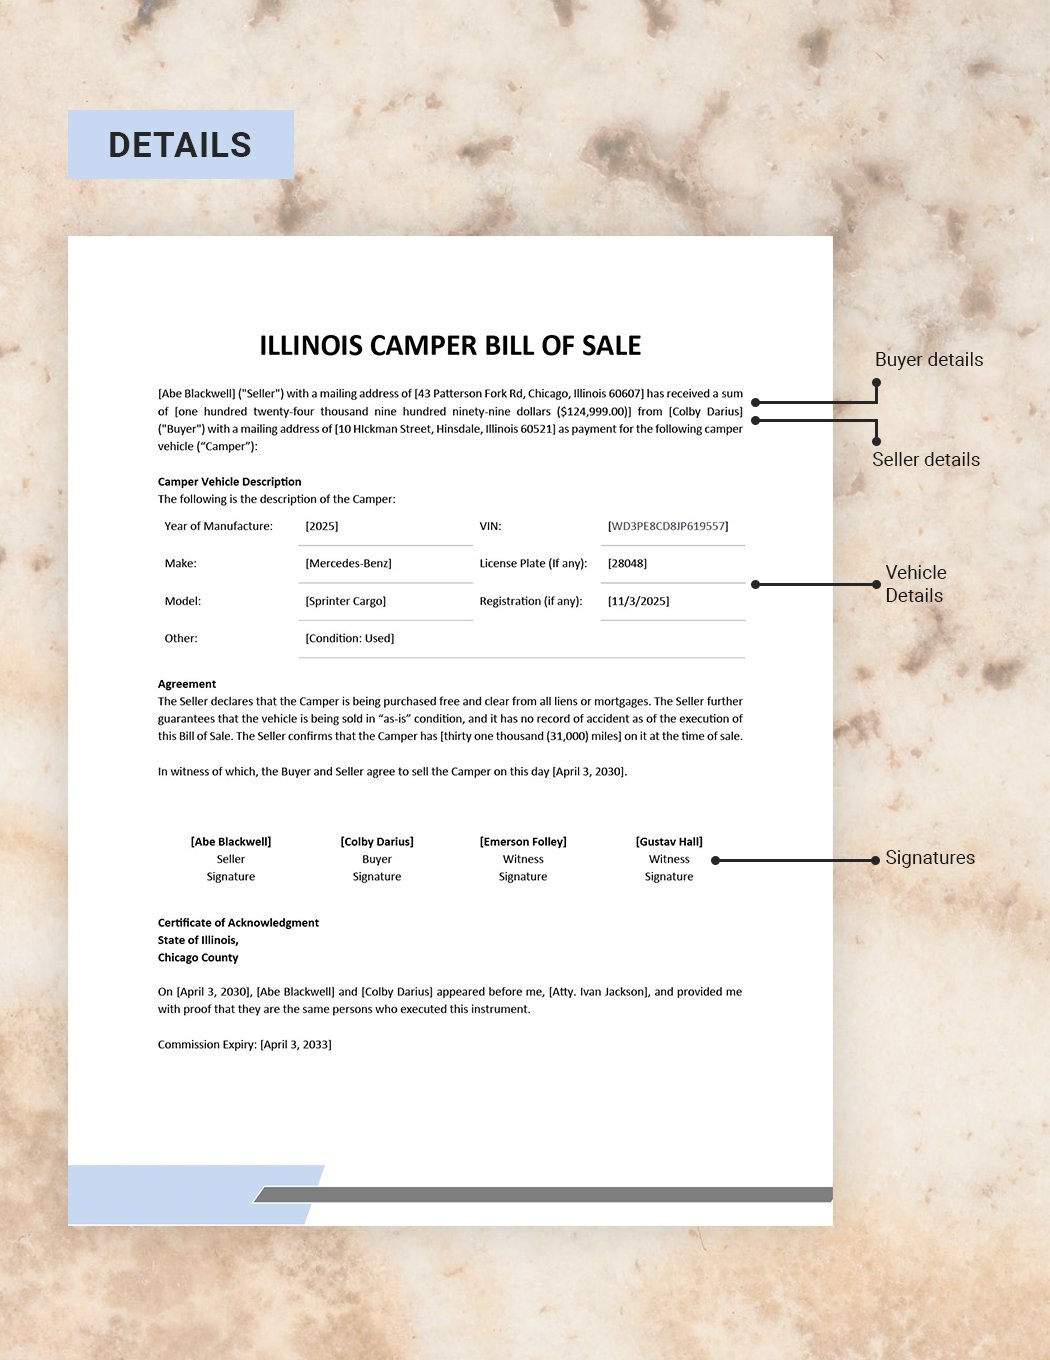 Illinois Camper Bill of Sale Template